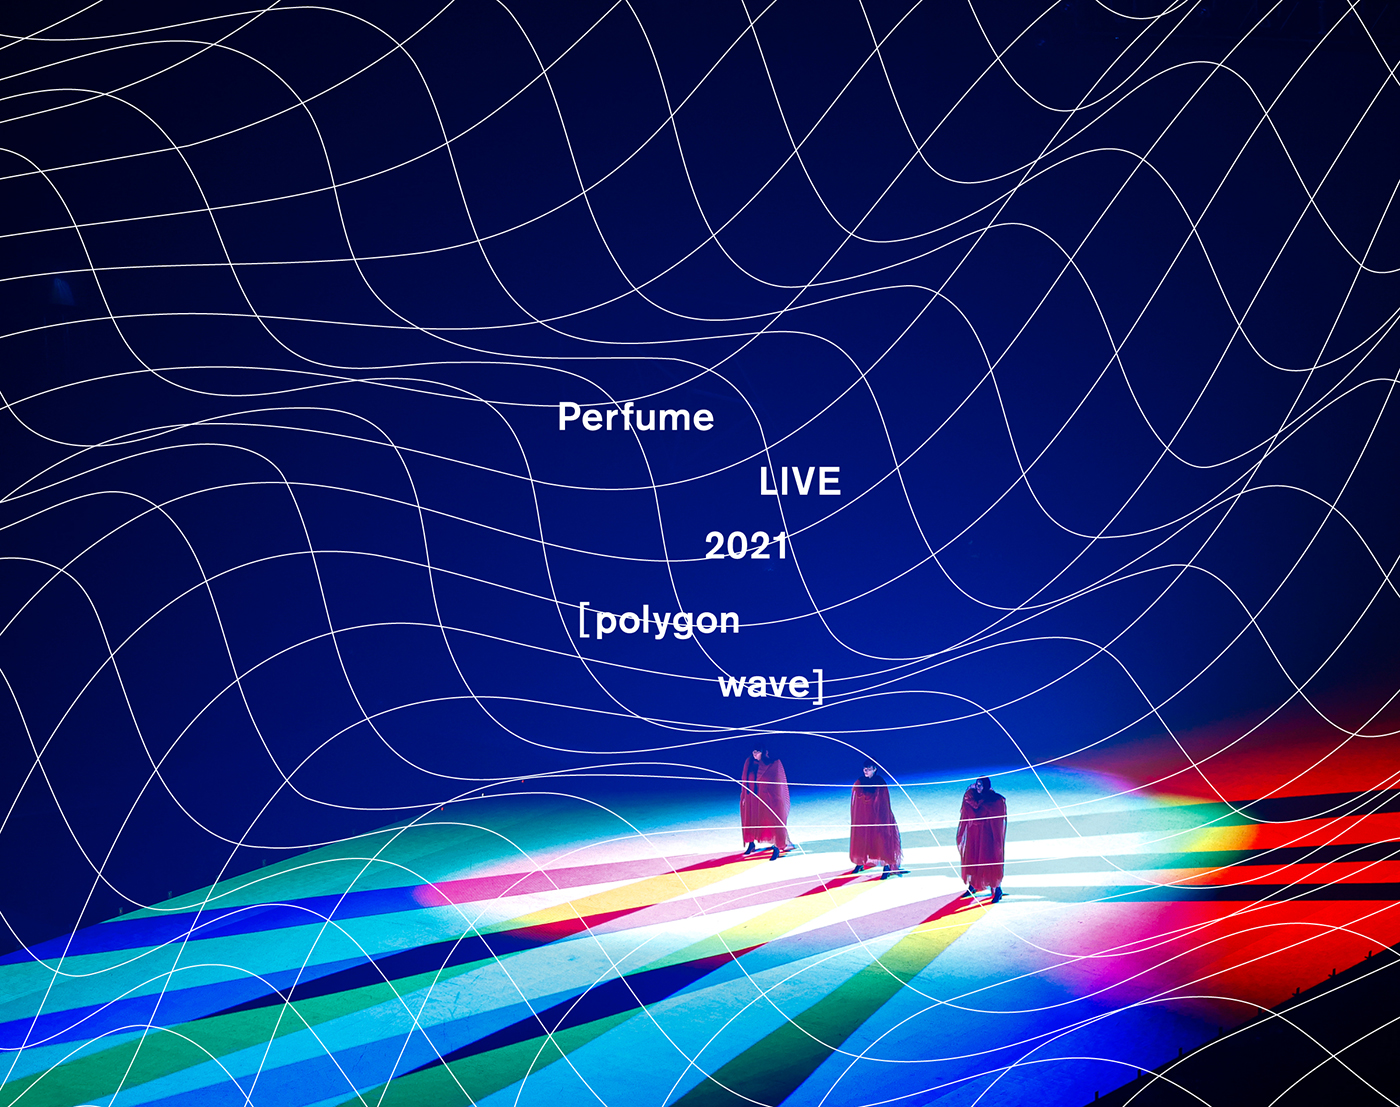 Perfume、新作ライブBD＆DVD『Perfume LIVE 2021 [polygon wave]』のスペシャルティザー公開